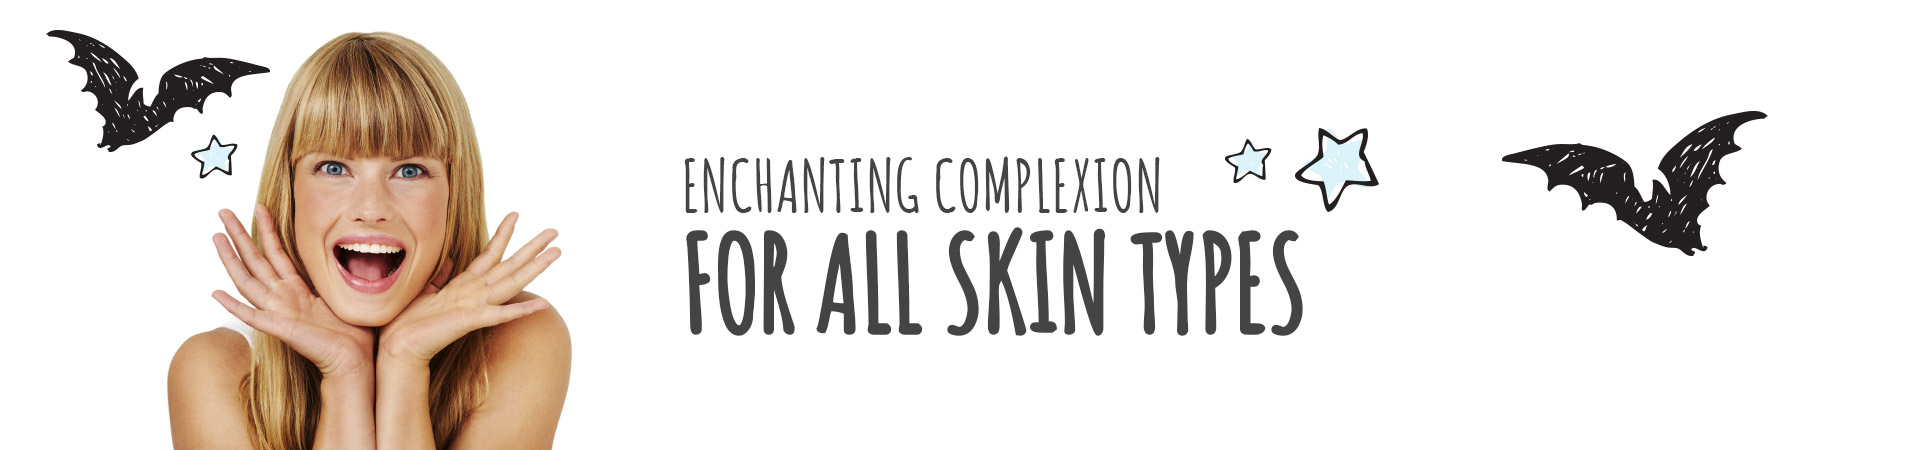 All skin types banner image